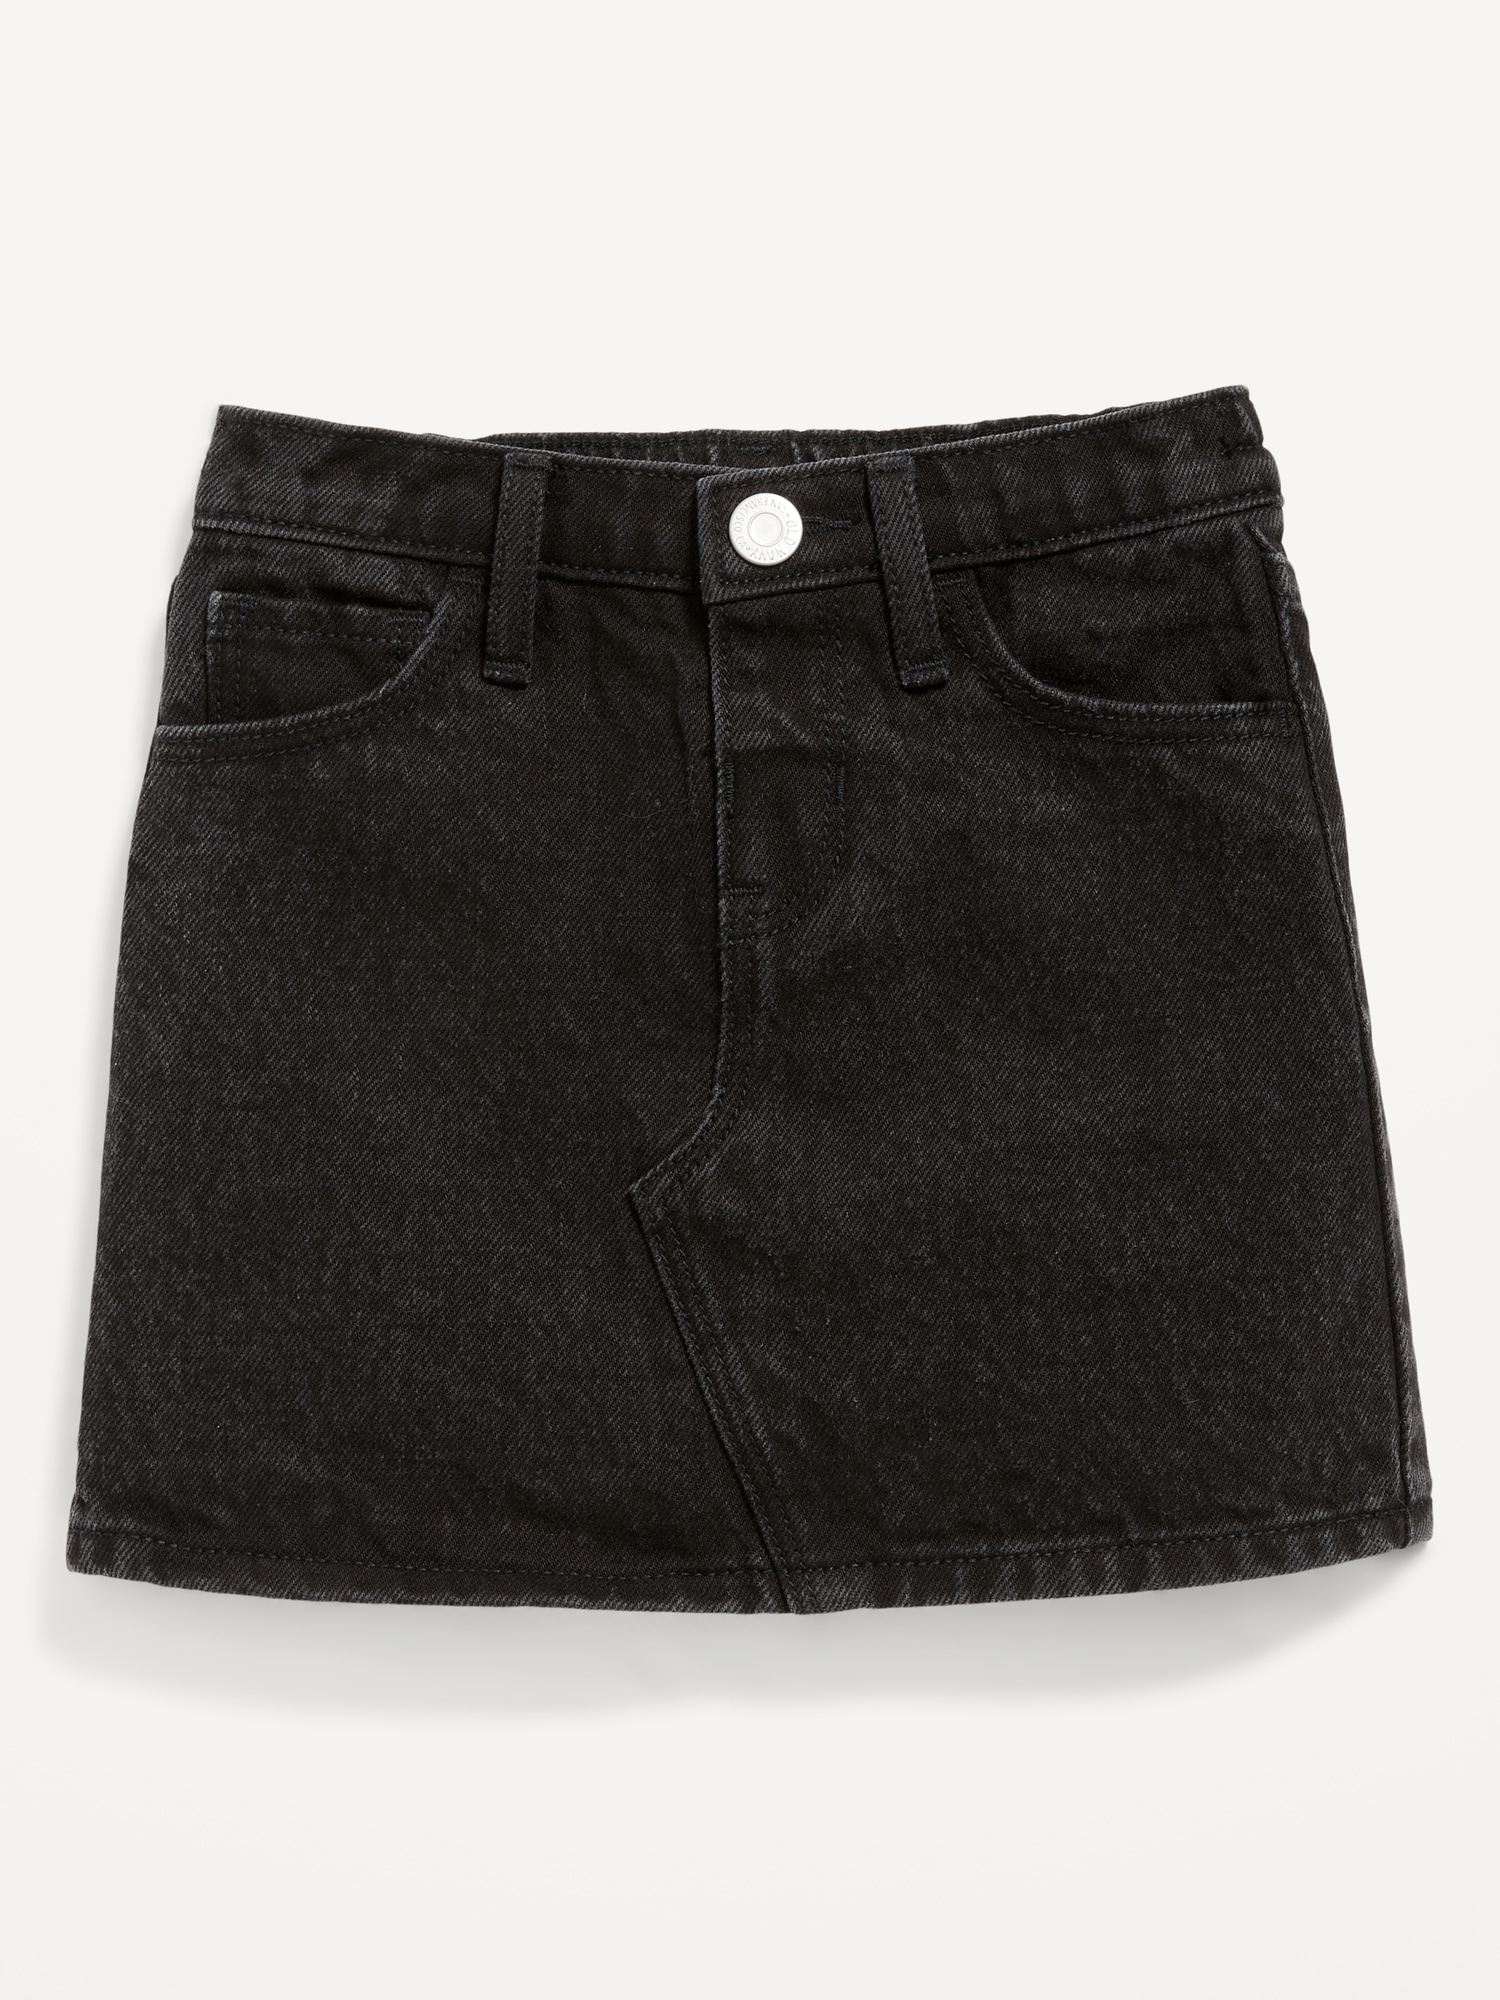 A-Line Jean Skirt for Toddler Girls | Old Navy